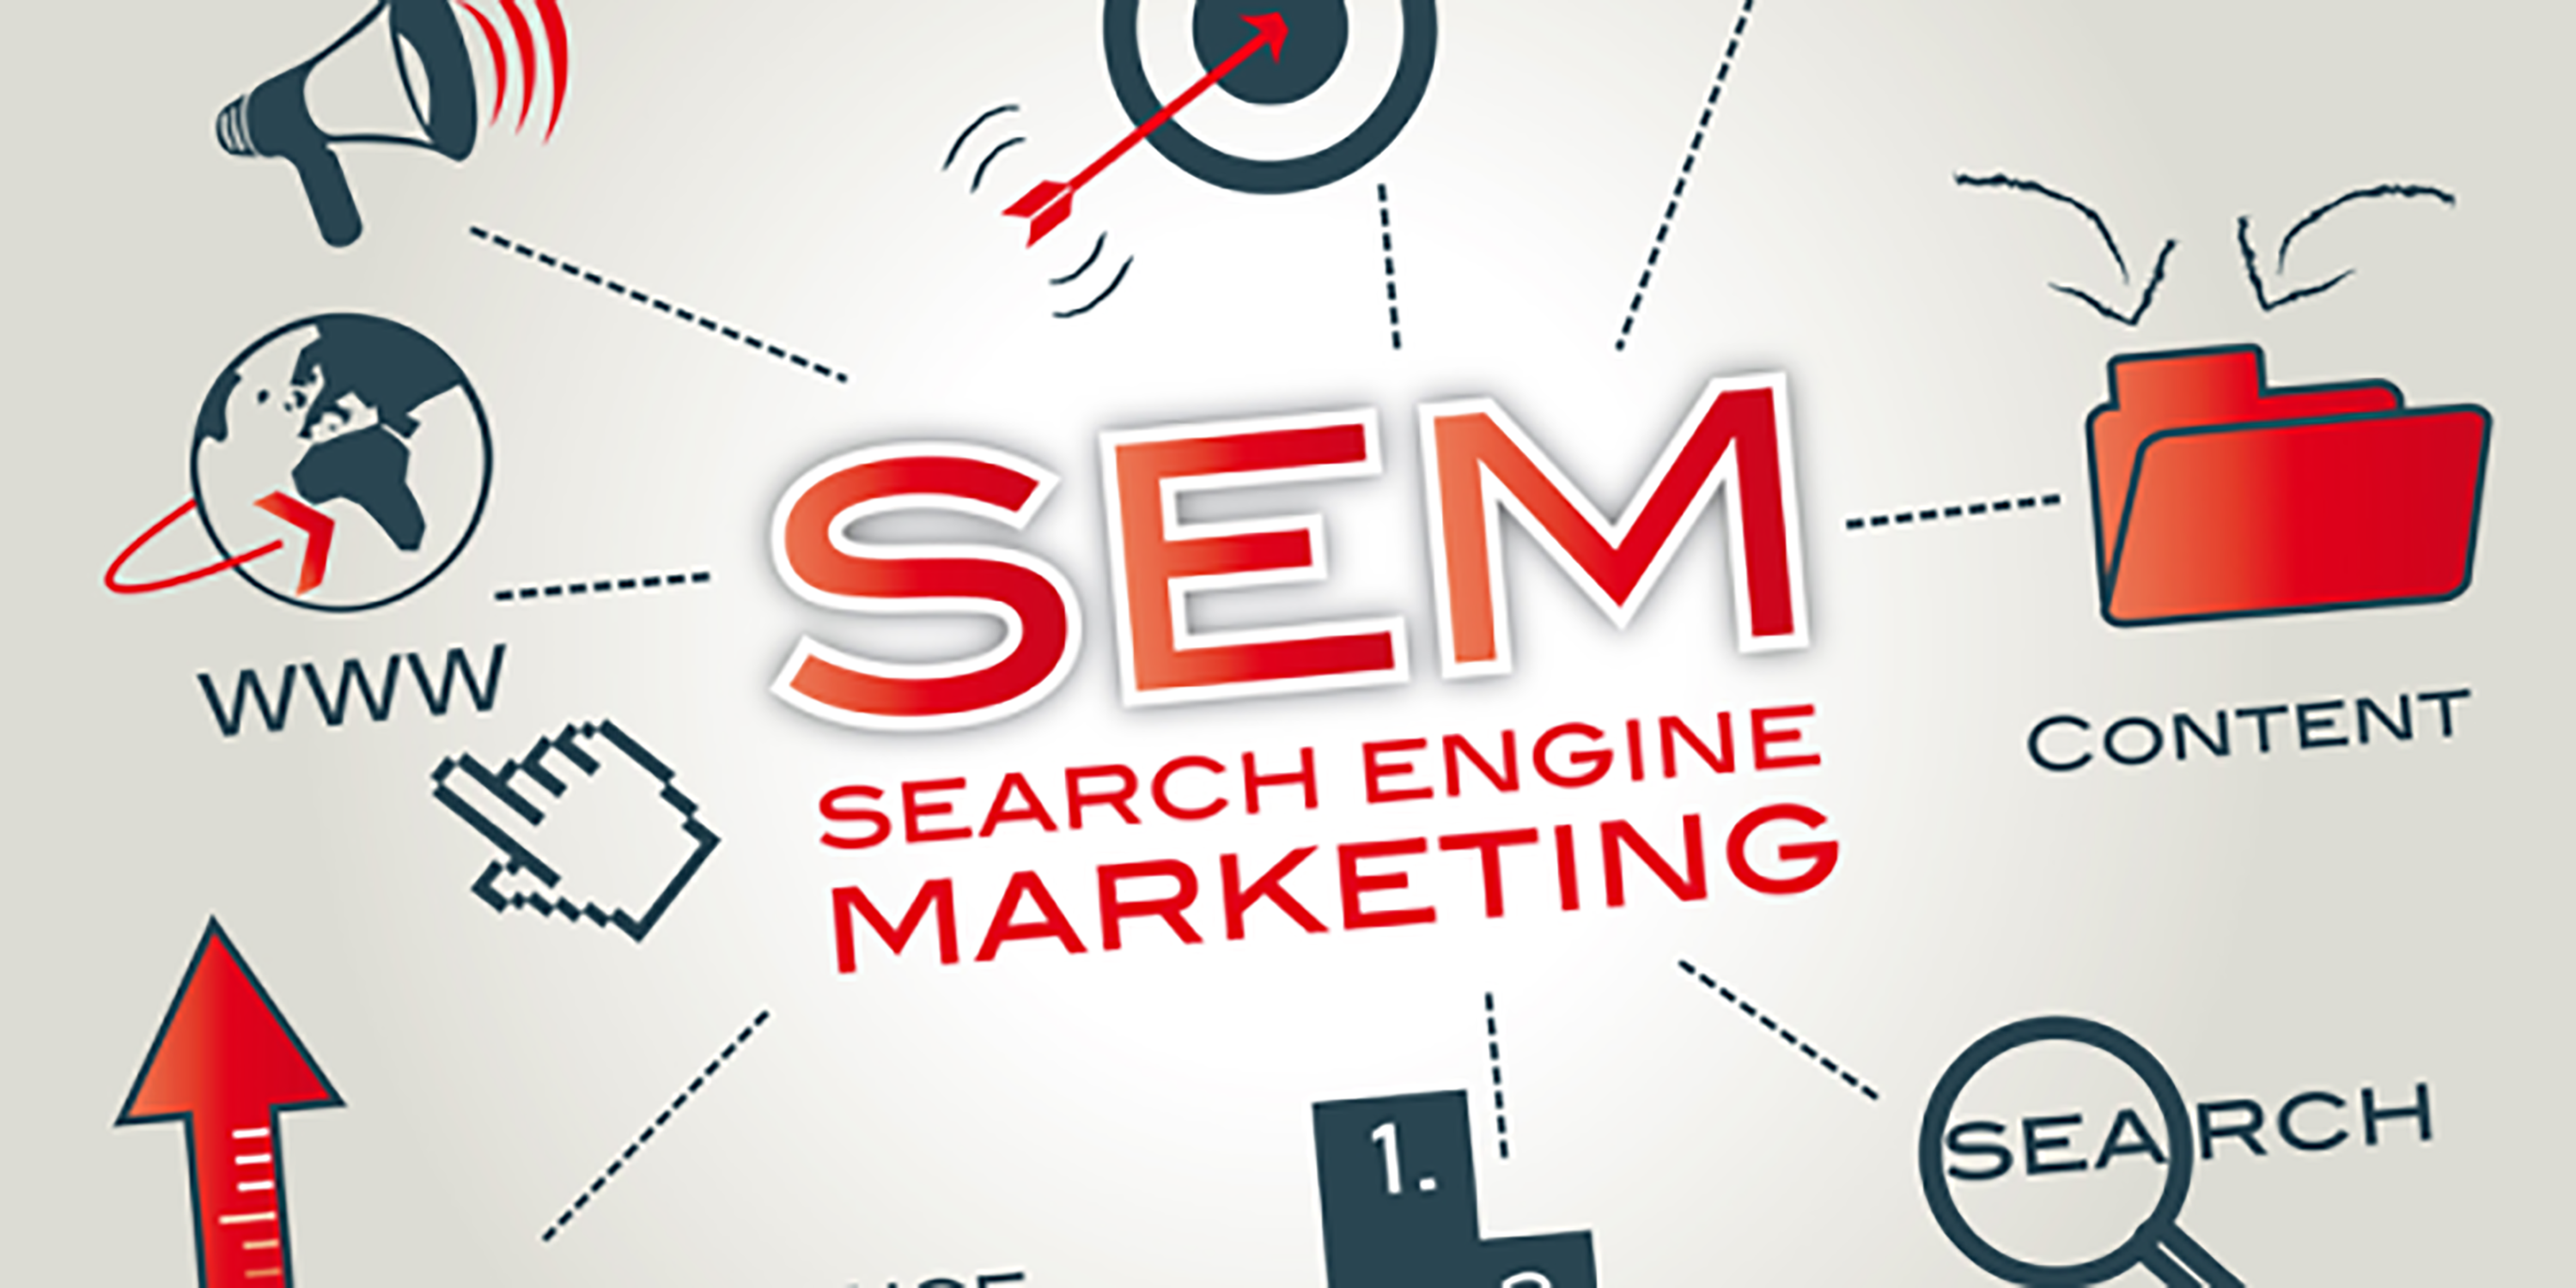 Pengertian, Manfaat dan Kelebihan Search Engine Marketing (SEM)